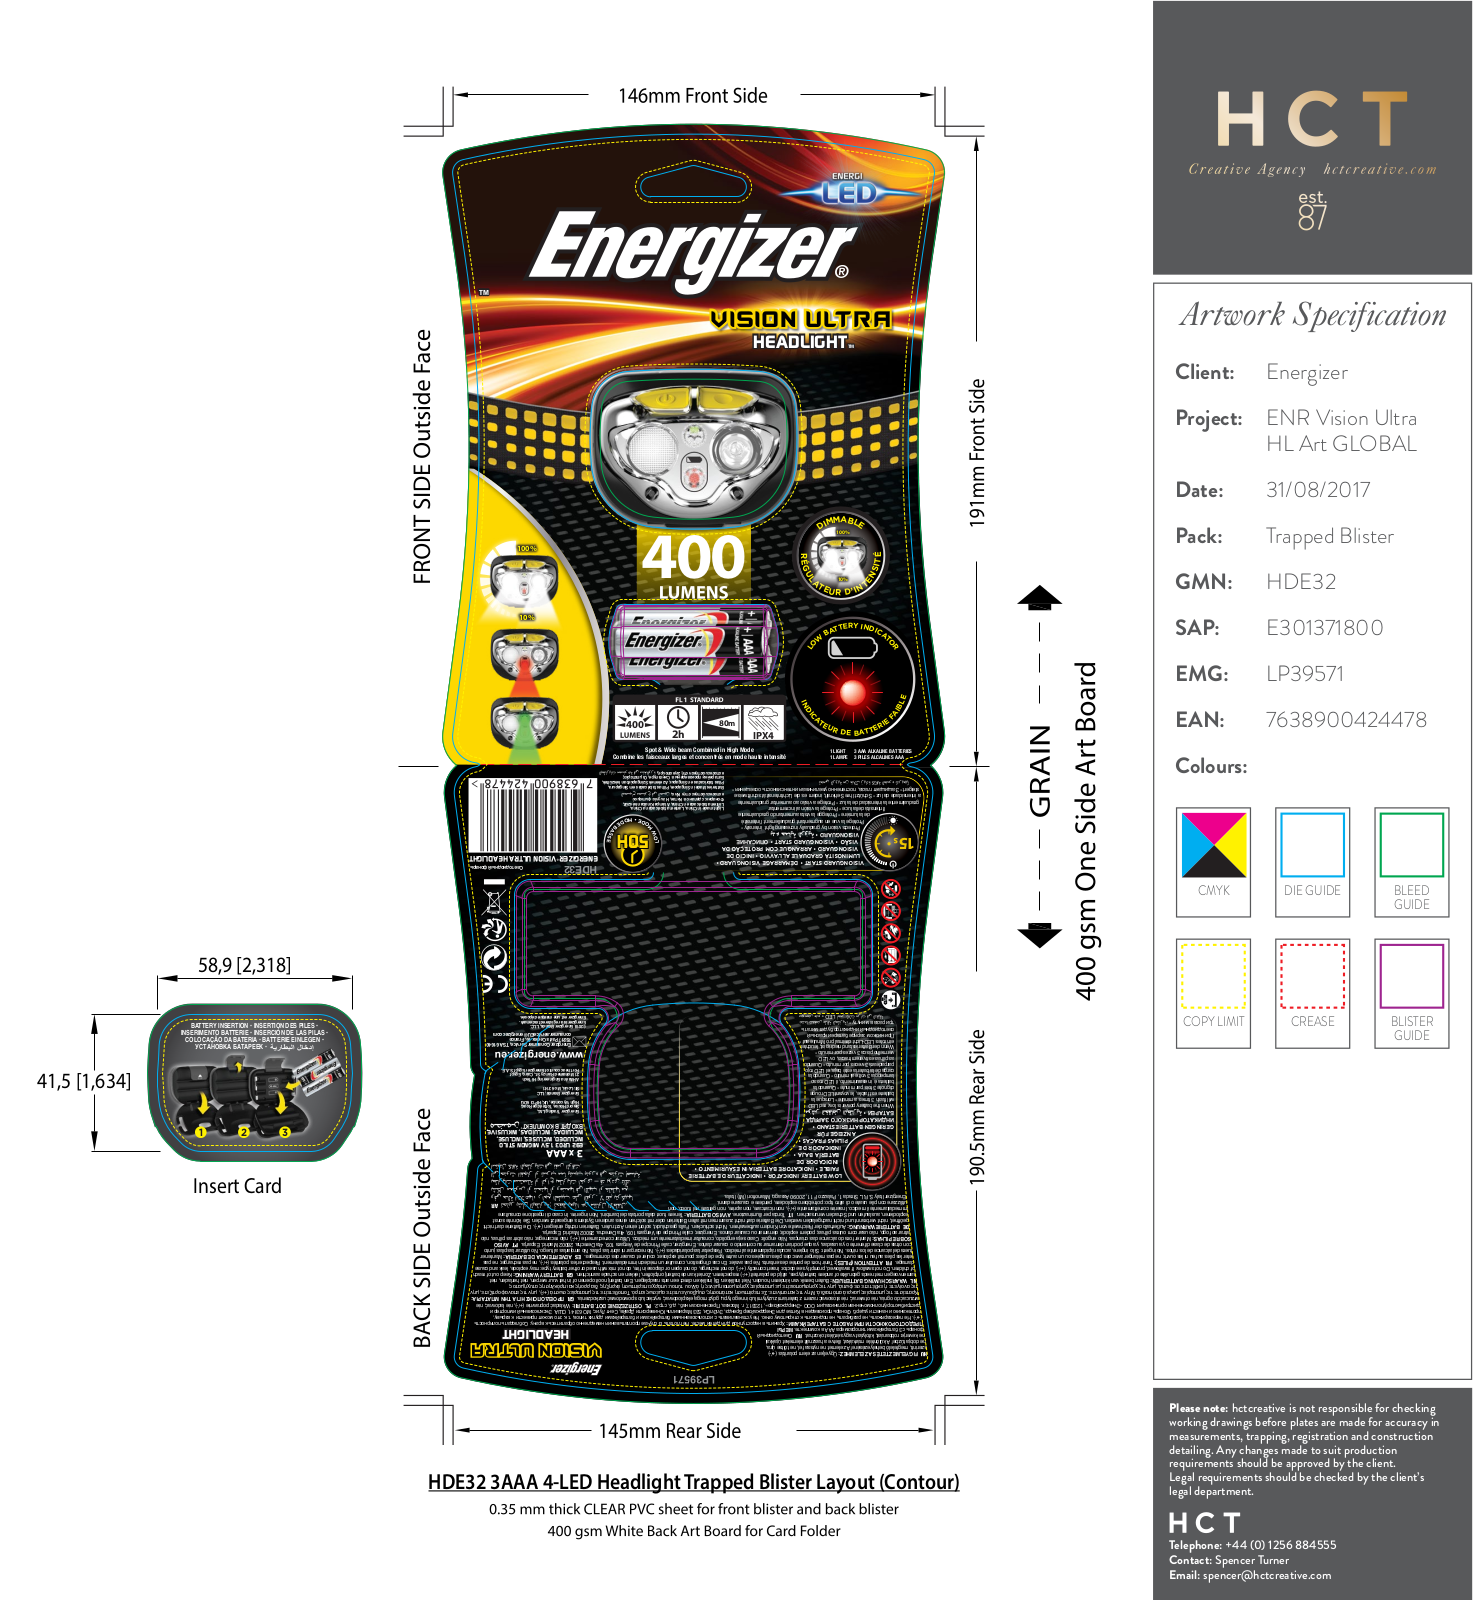 Energizer Vision Ultra Headlight User Manual